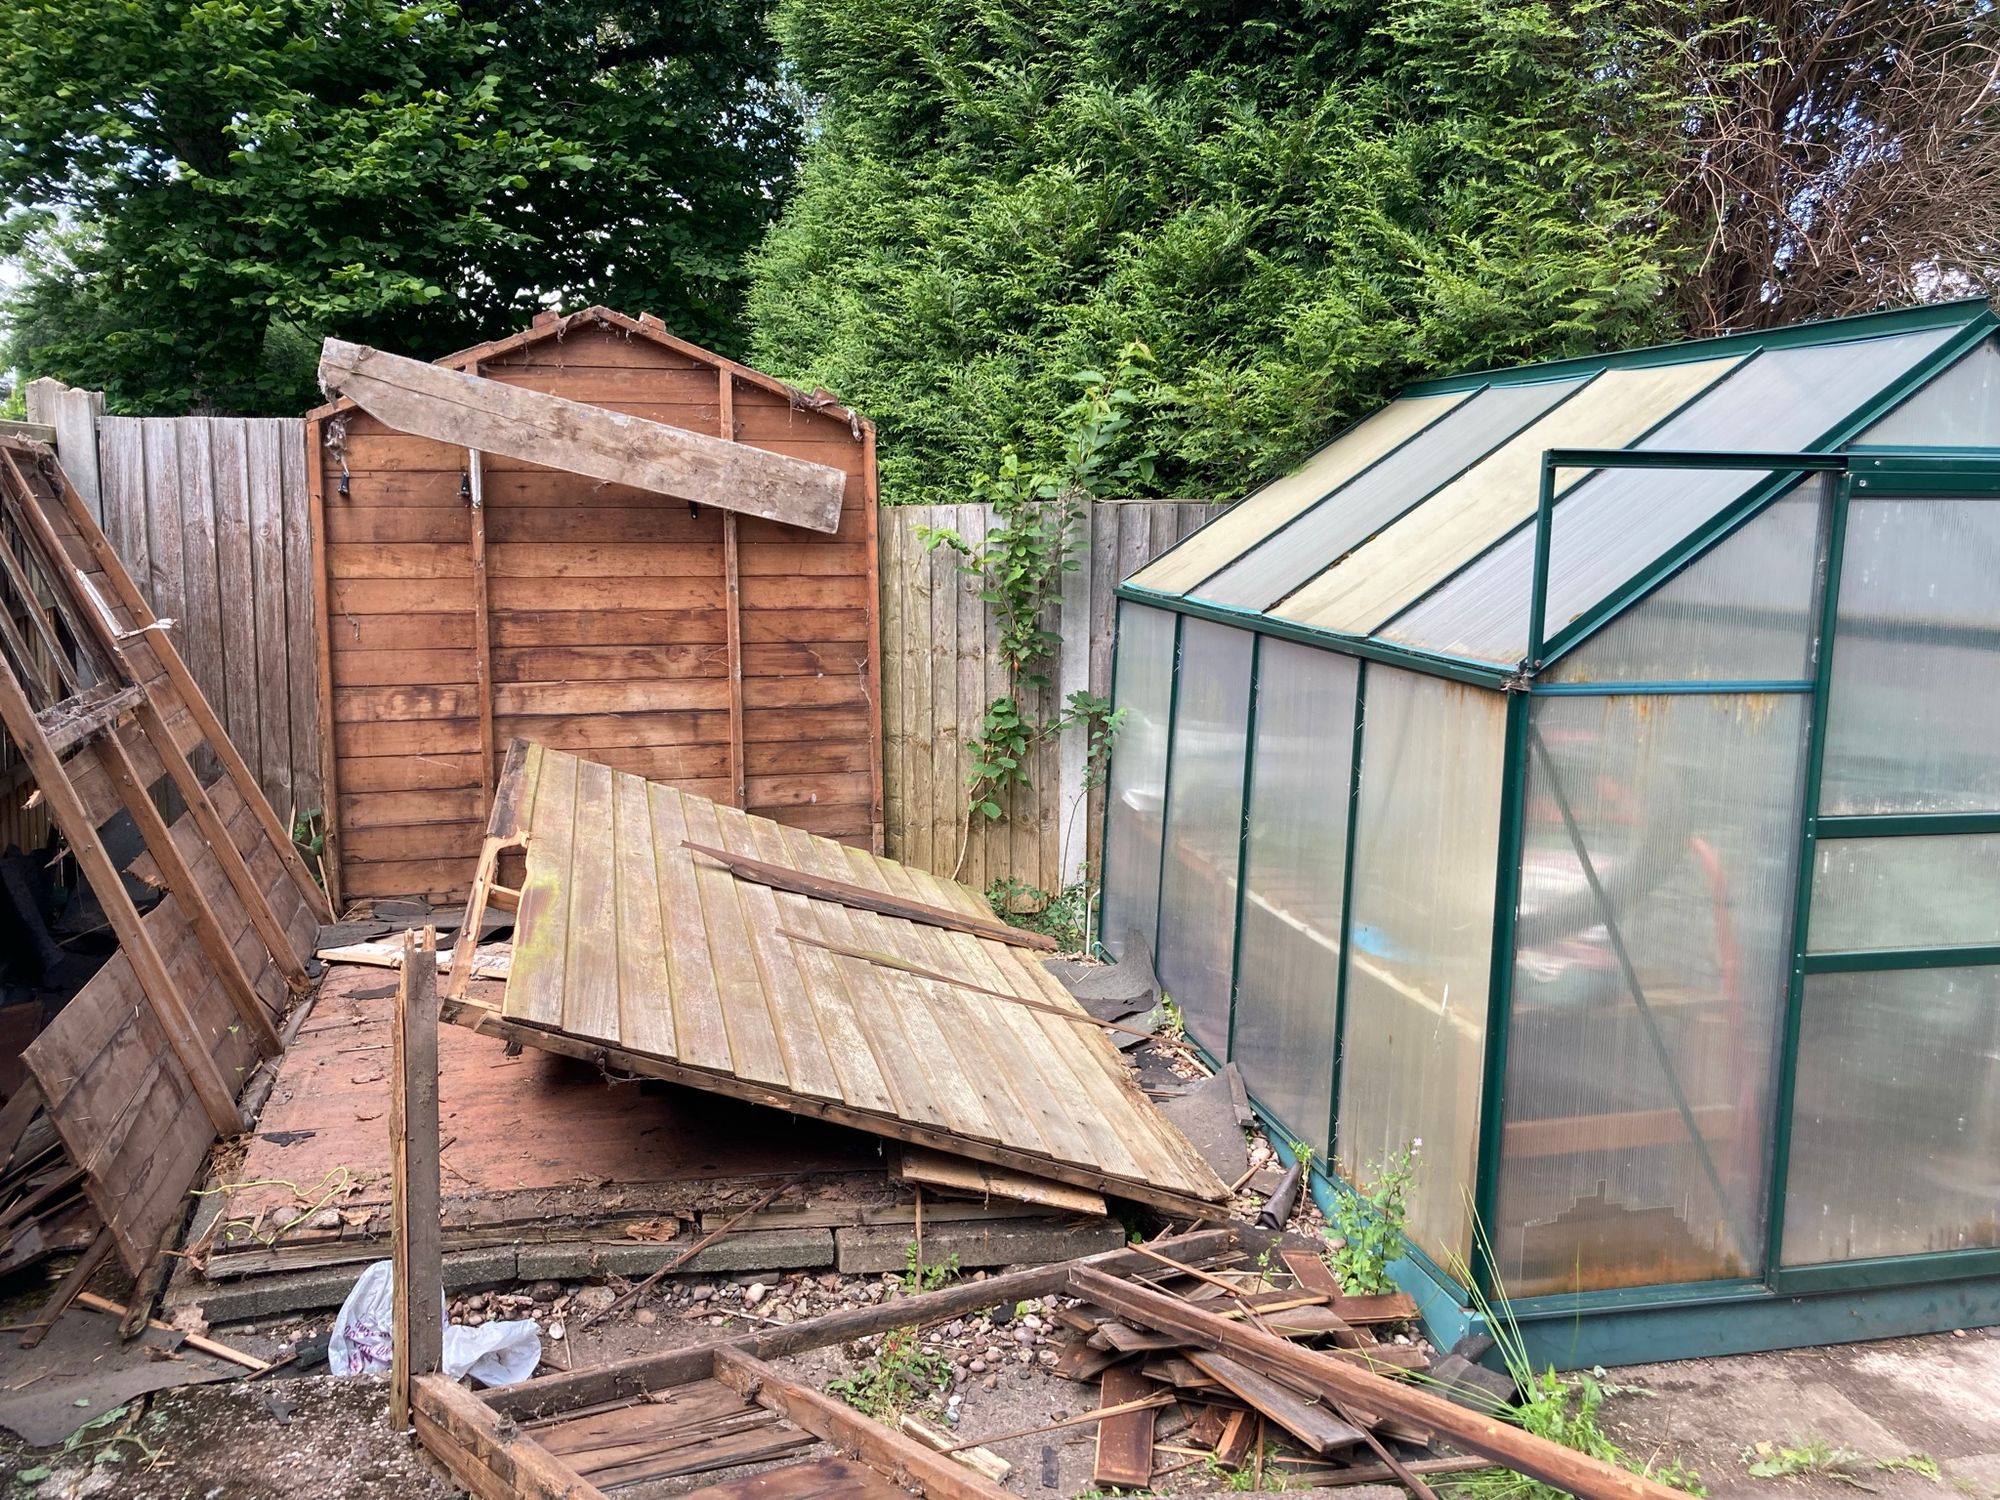 A demolished garden shed